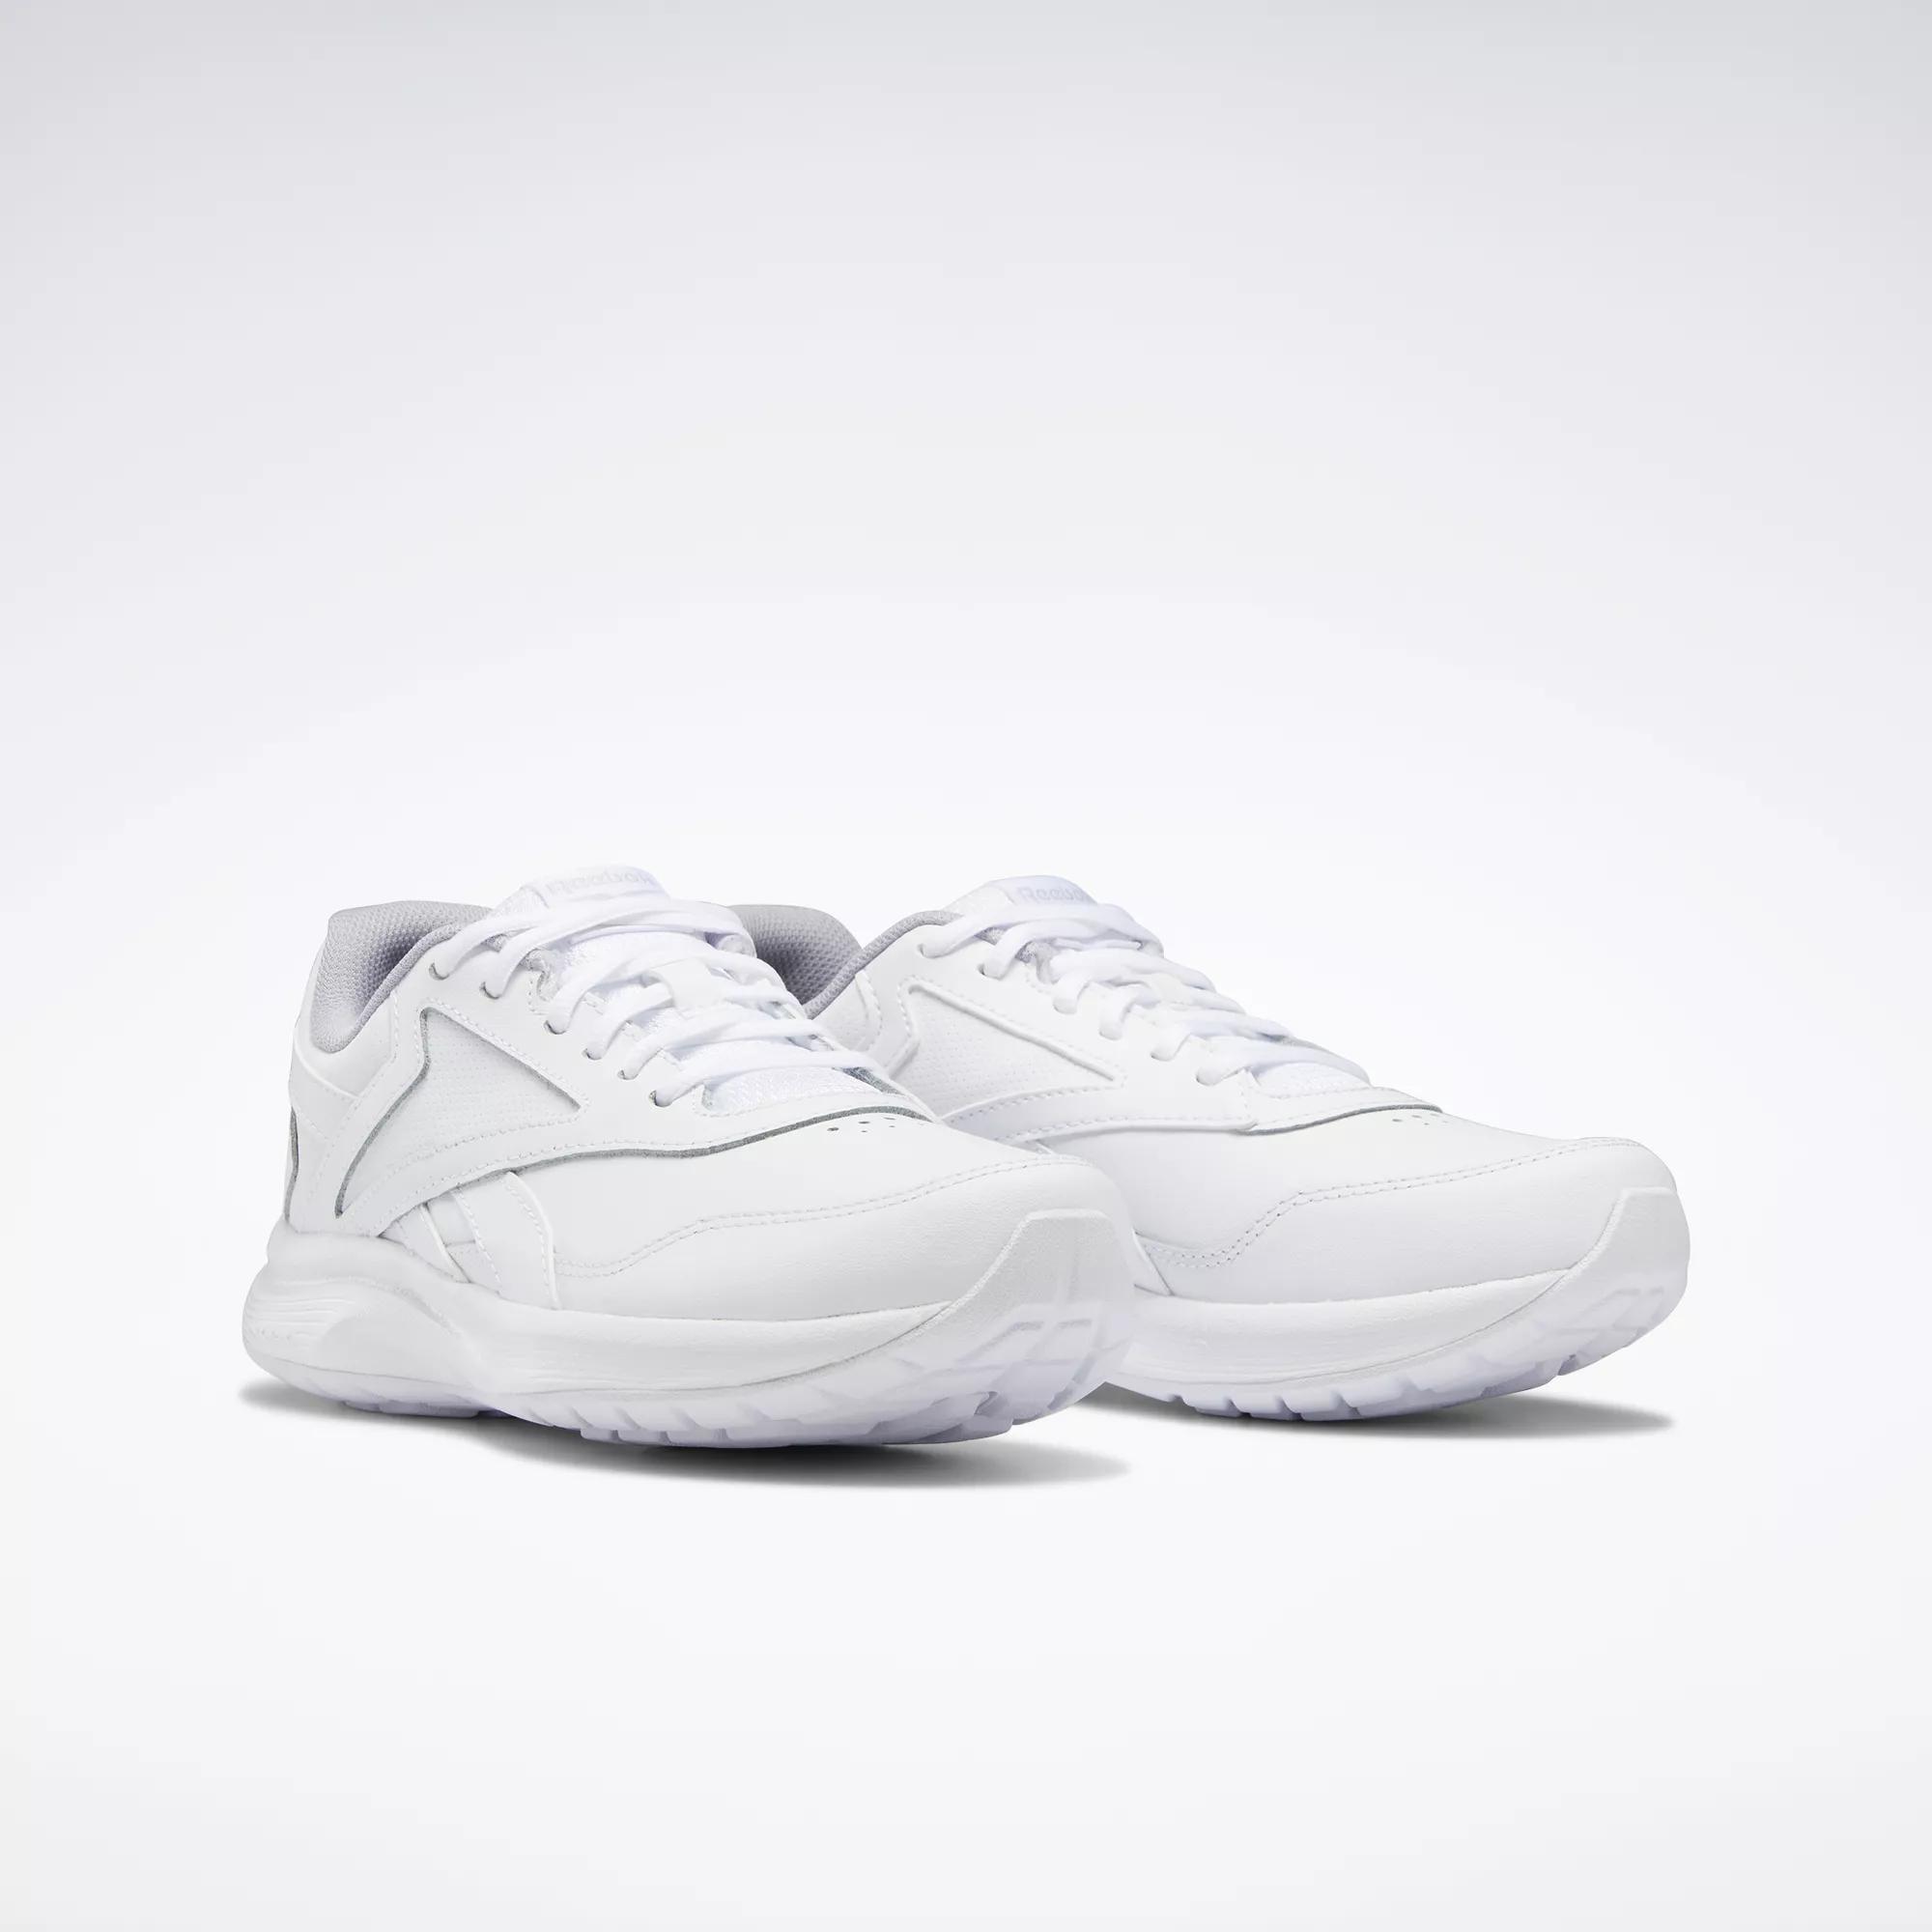 Walk 7 DMX MAX Wide Women's Shoes - White / Cold Grey / Collegiate Royal | Reebok